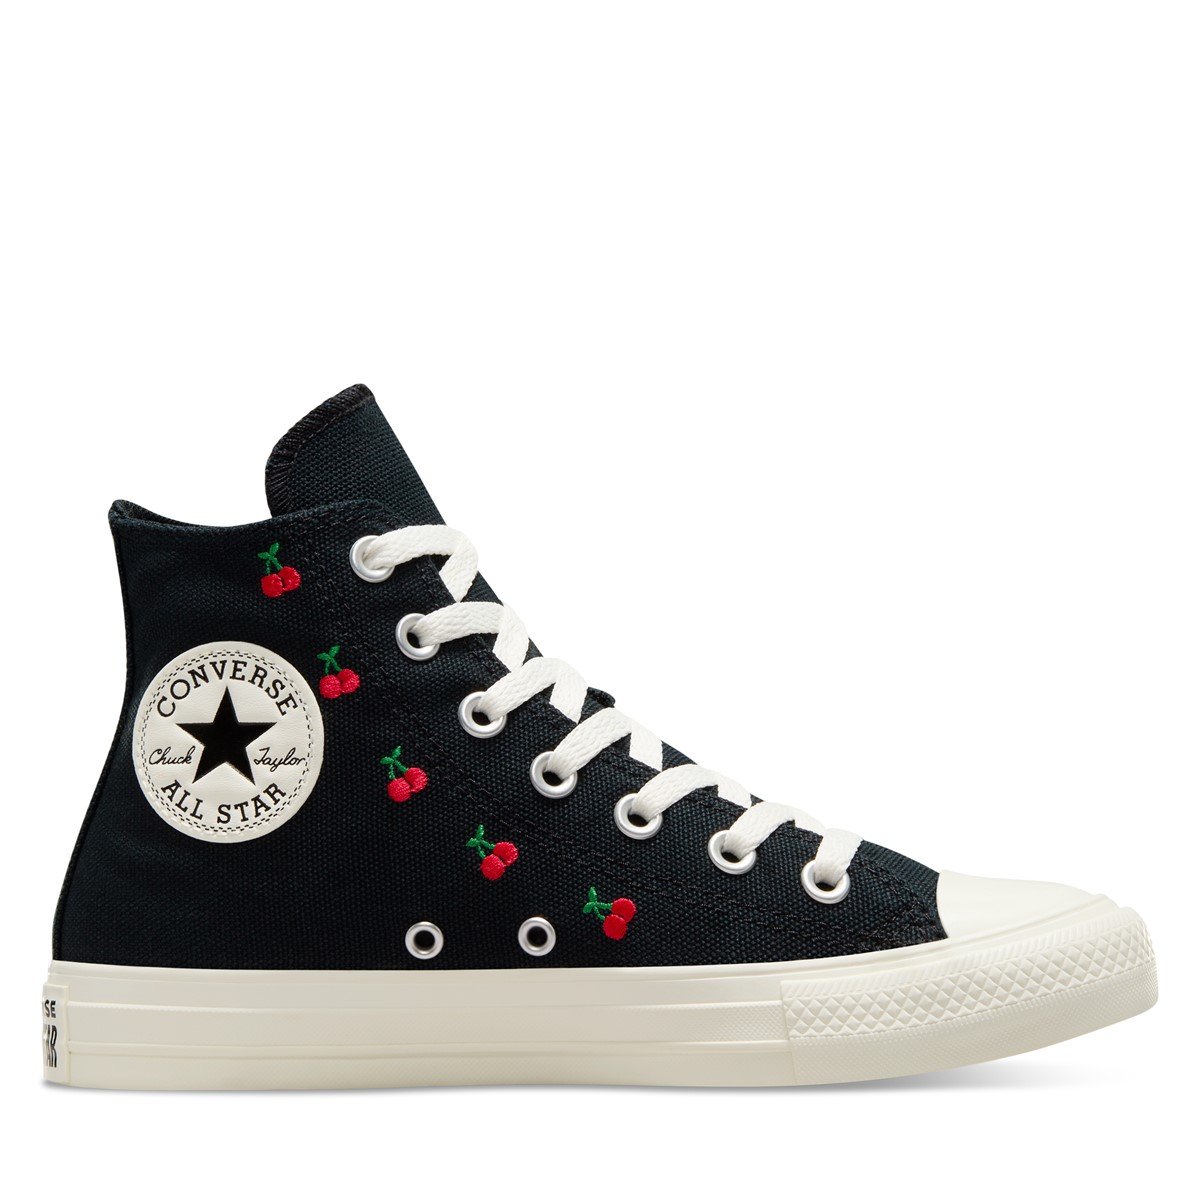 Women's Chuck Taylor All Star Cherries Hi Sneakers in Black/Red/Egret